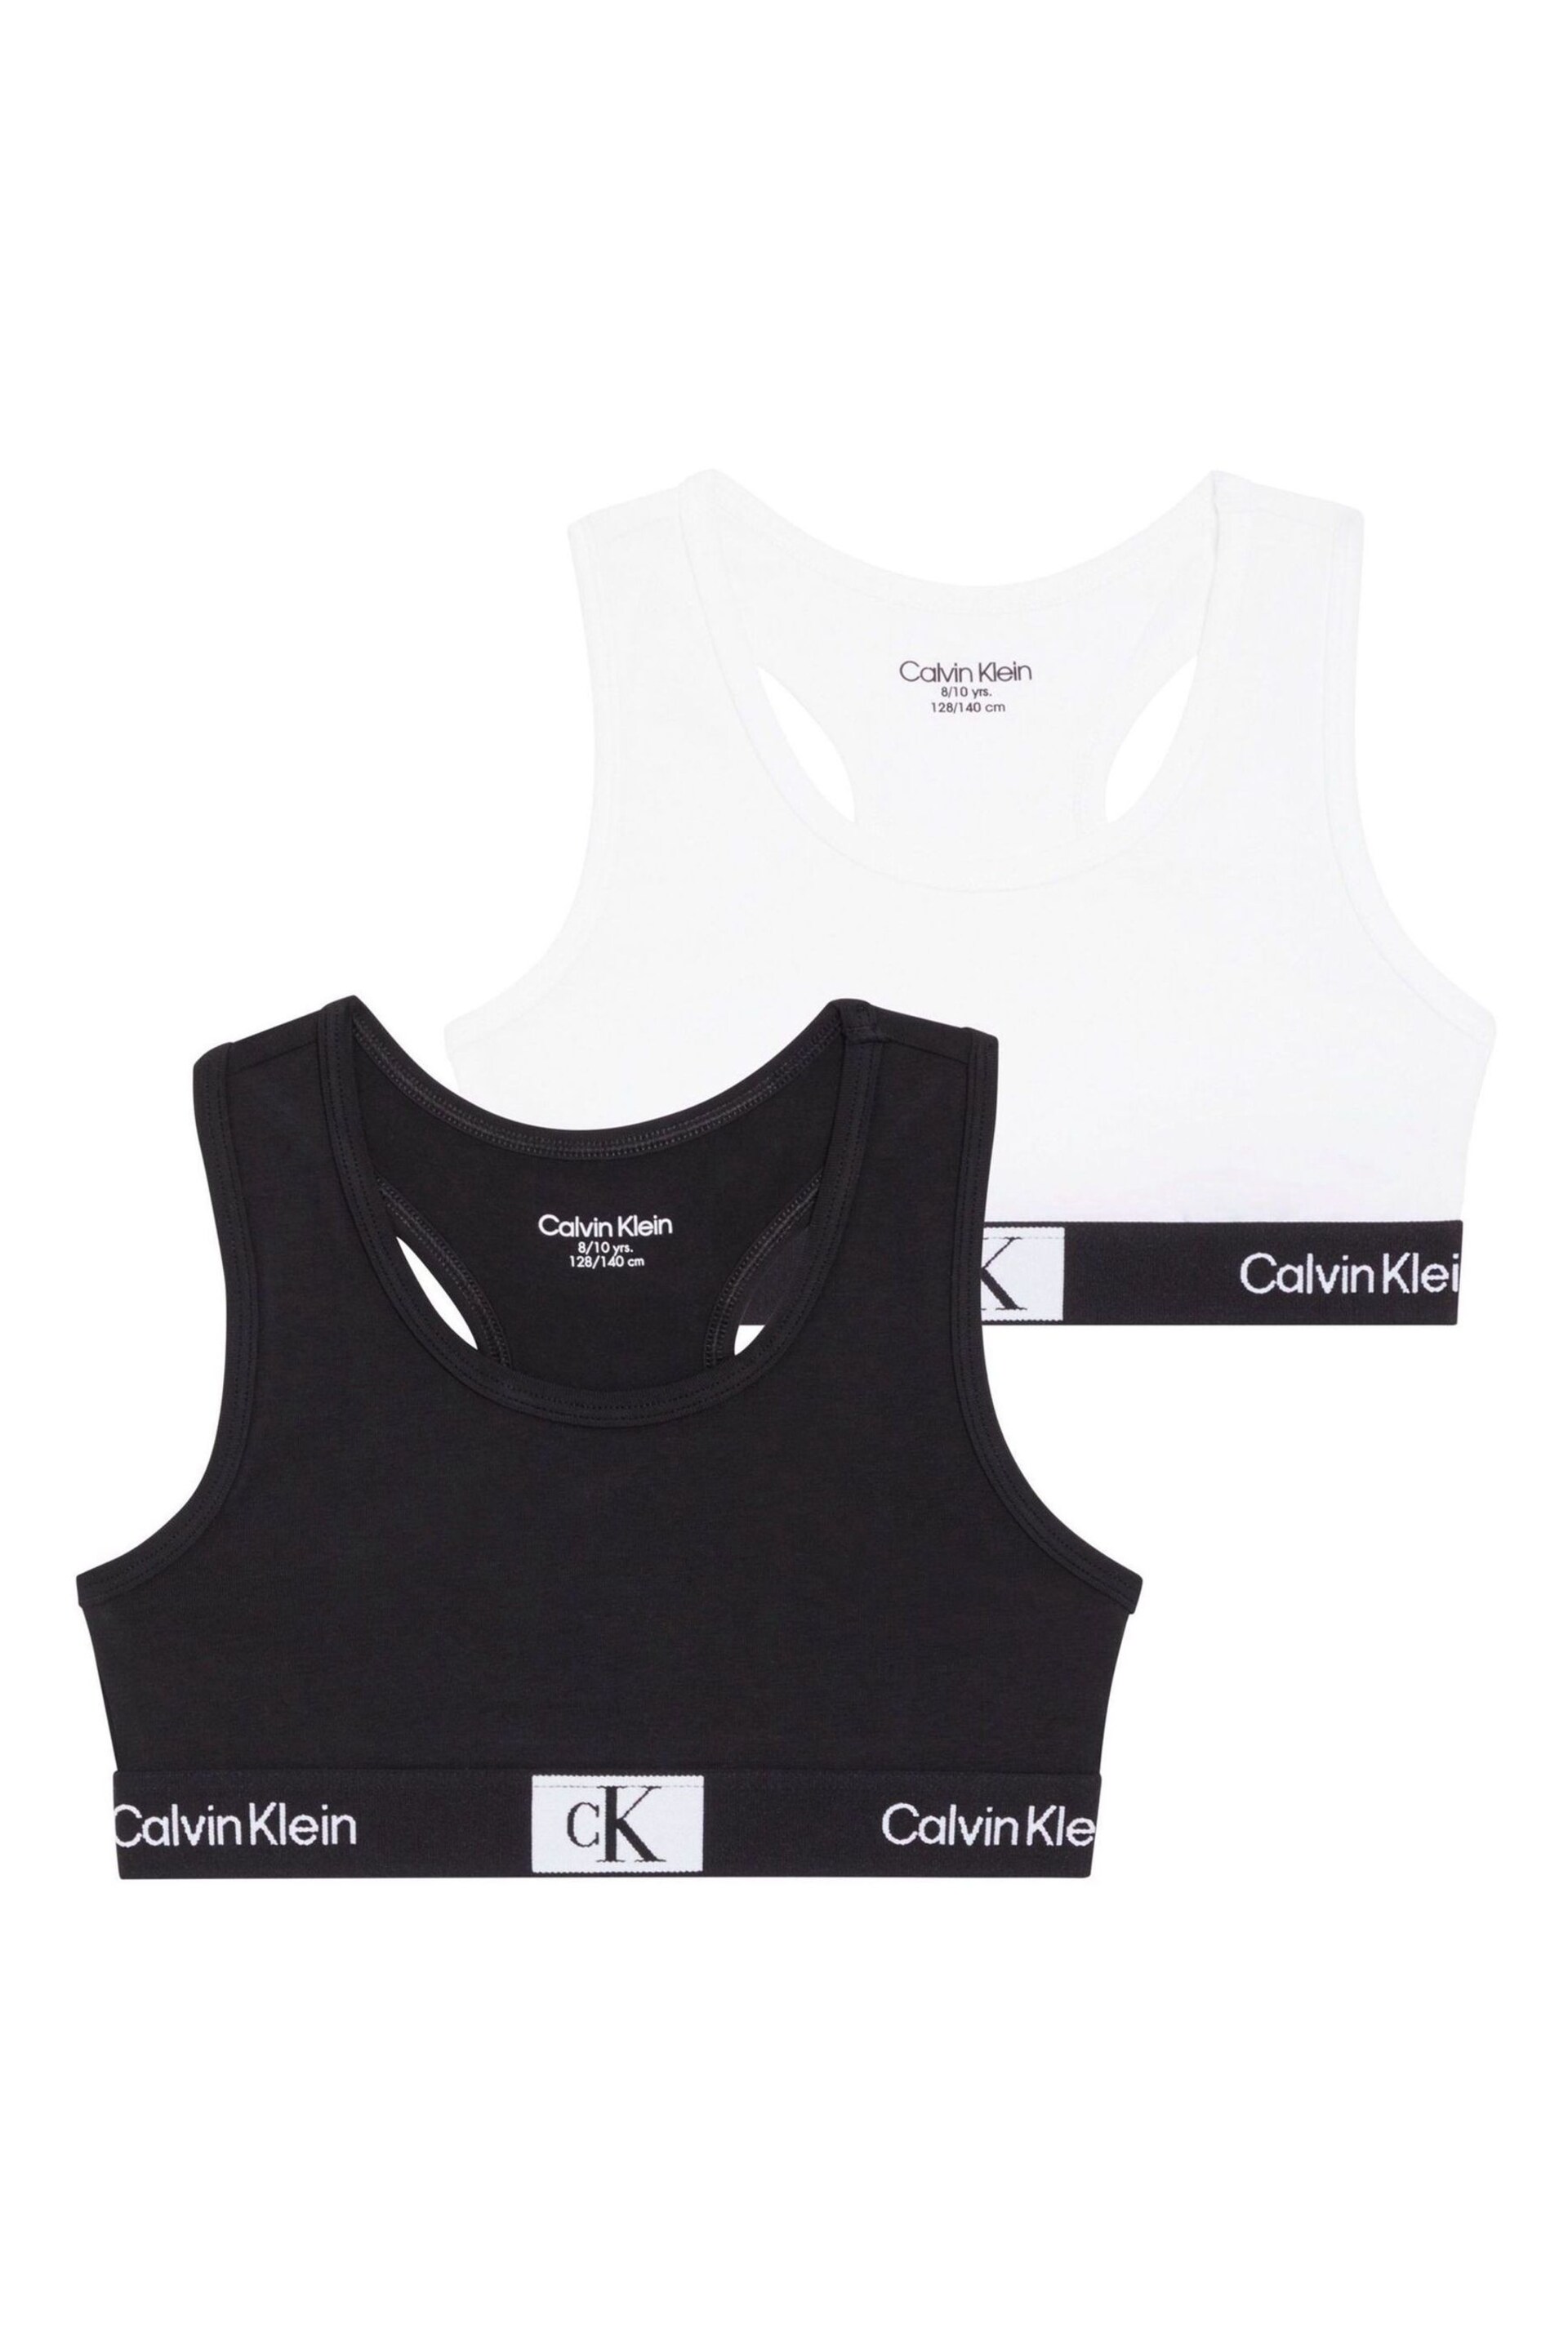 Calvin Klein Black Bralettes 2 Pack - Image 1 of 2